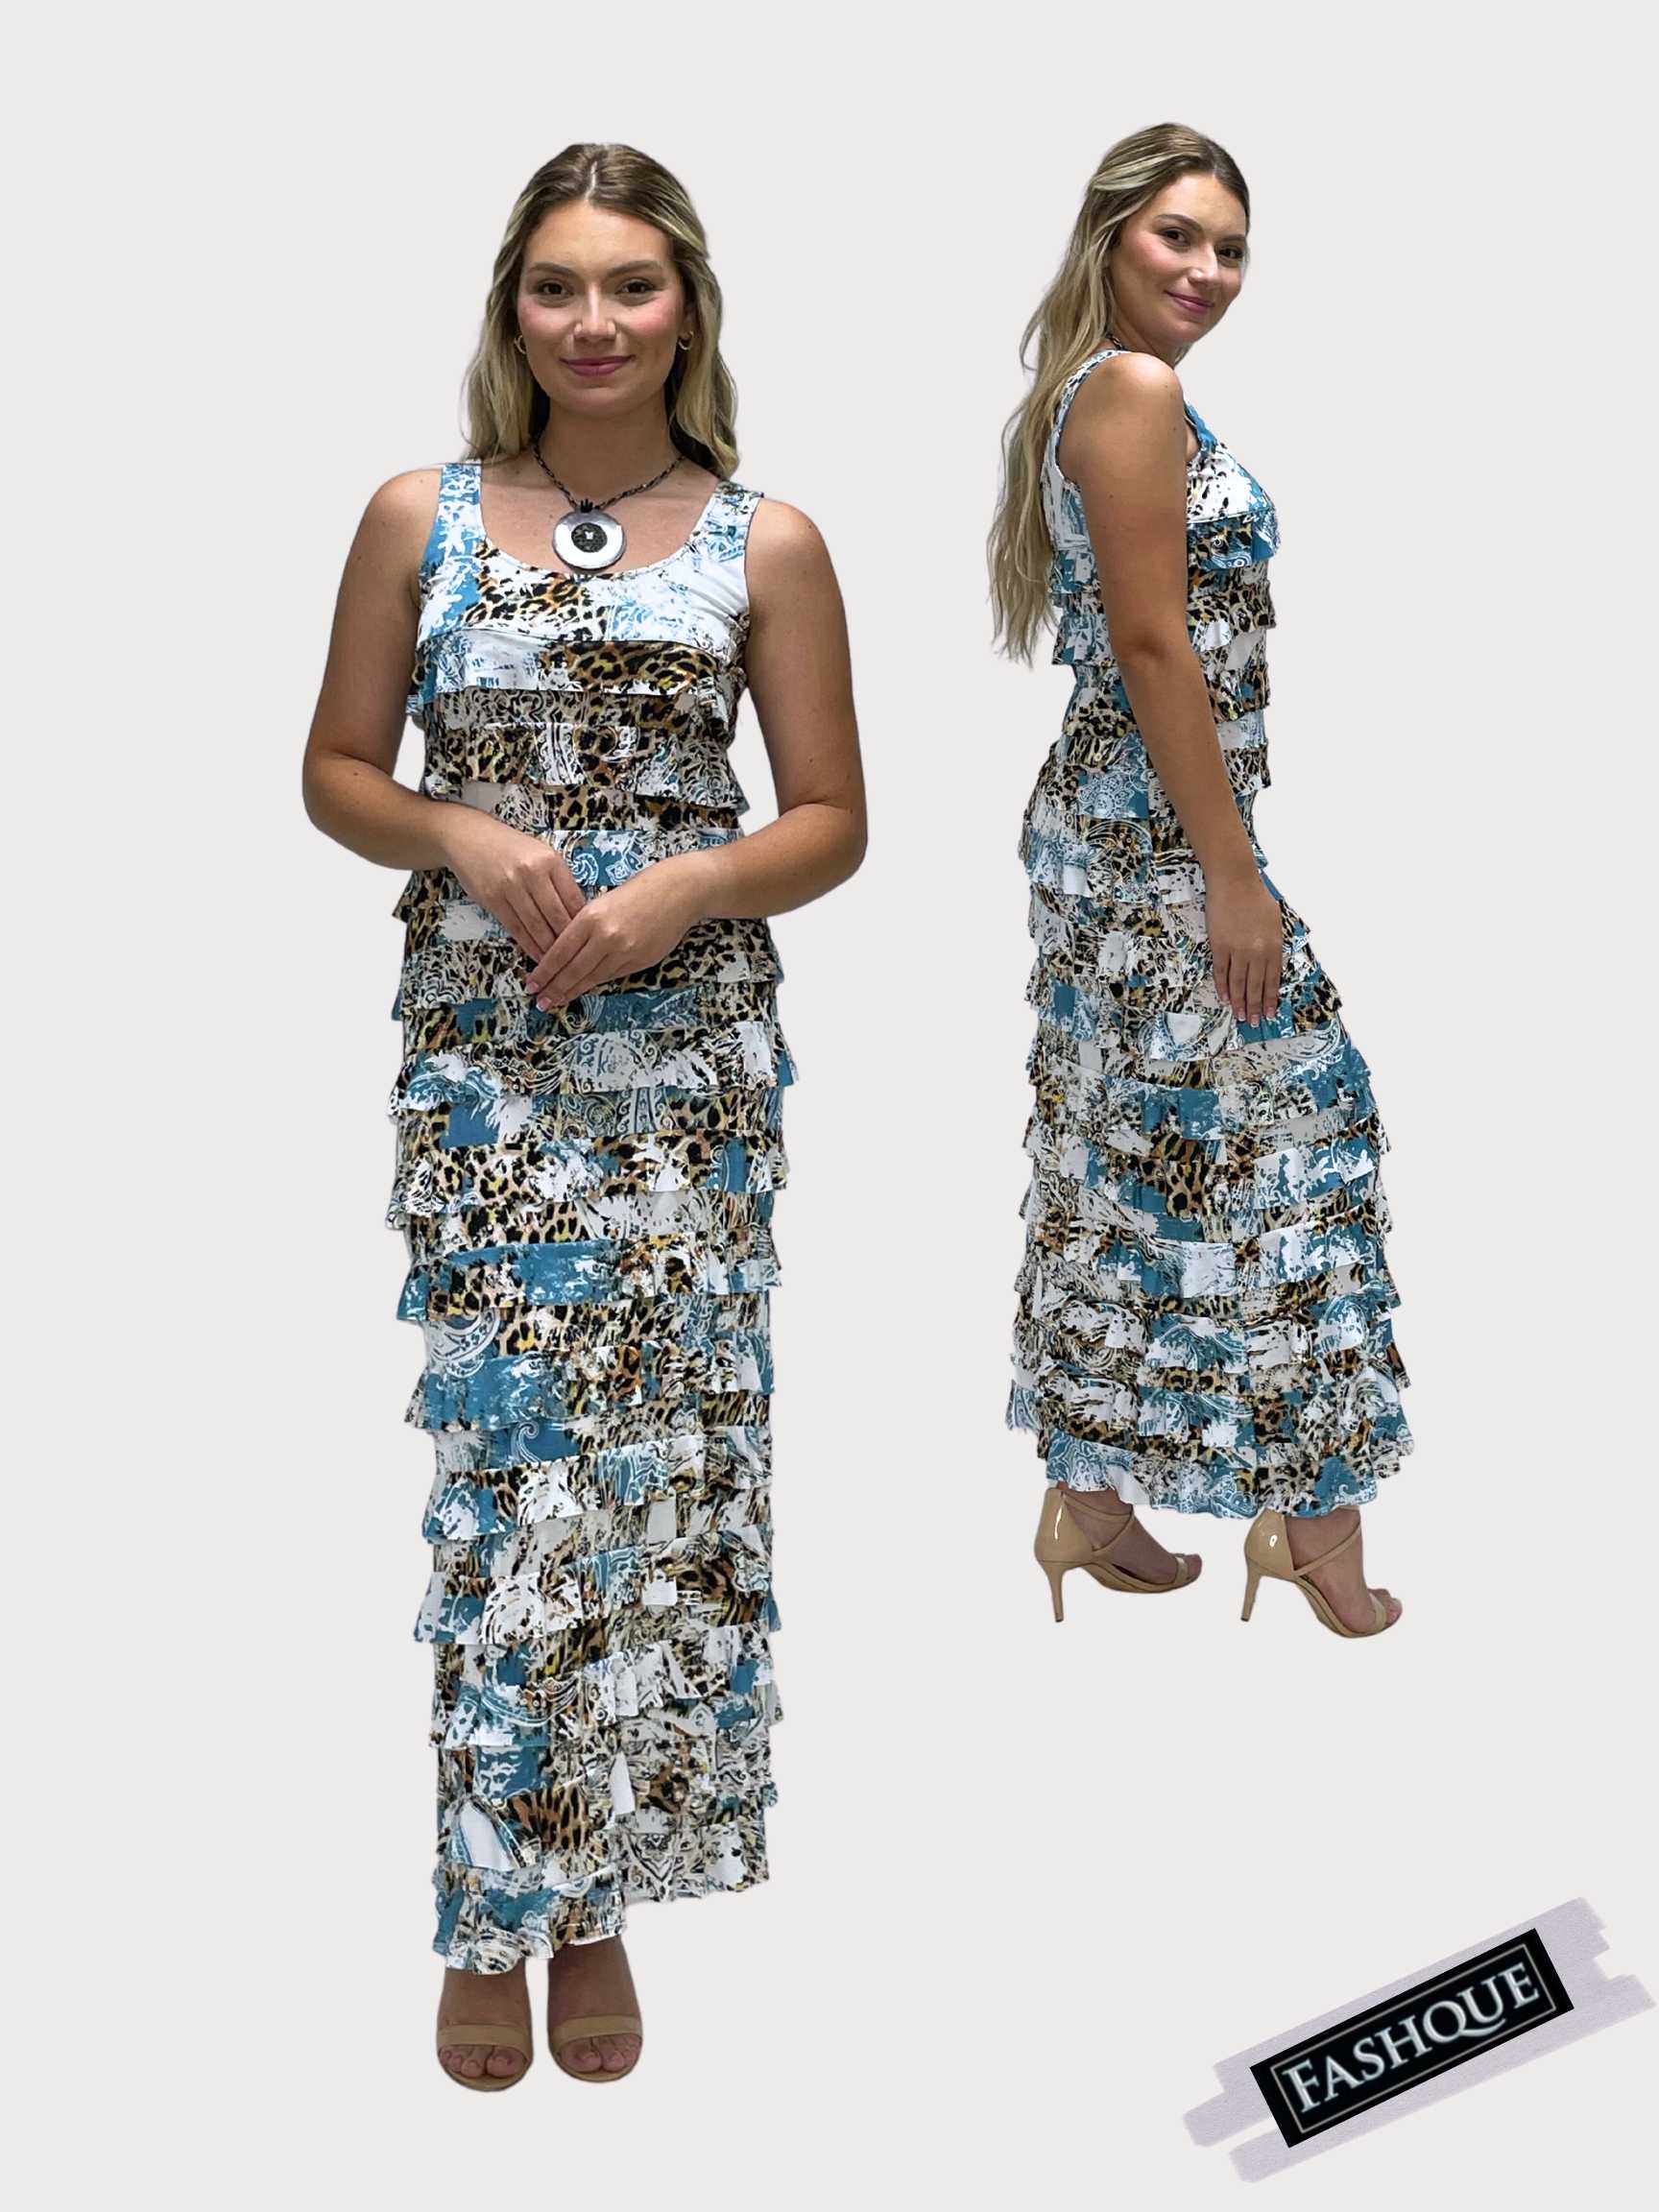 FASHQUE - Ruffle Maxi Dress Sleeveless NEW PRINTED - D2211